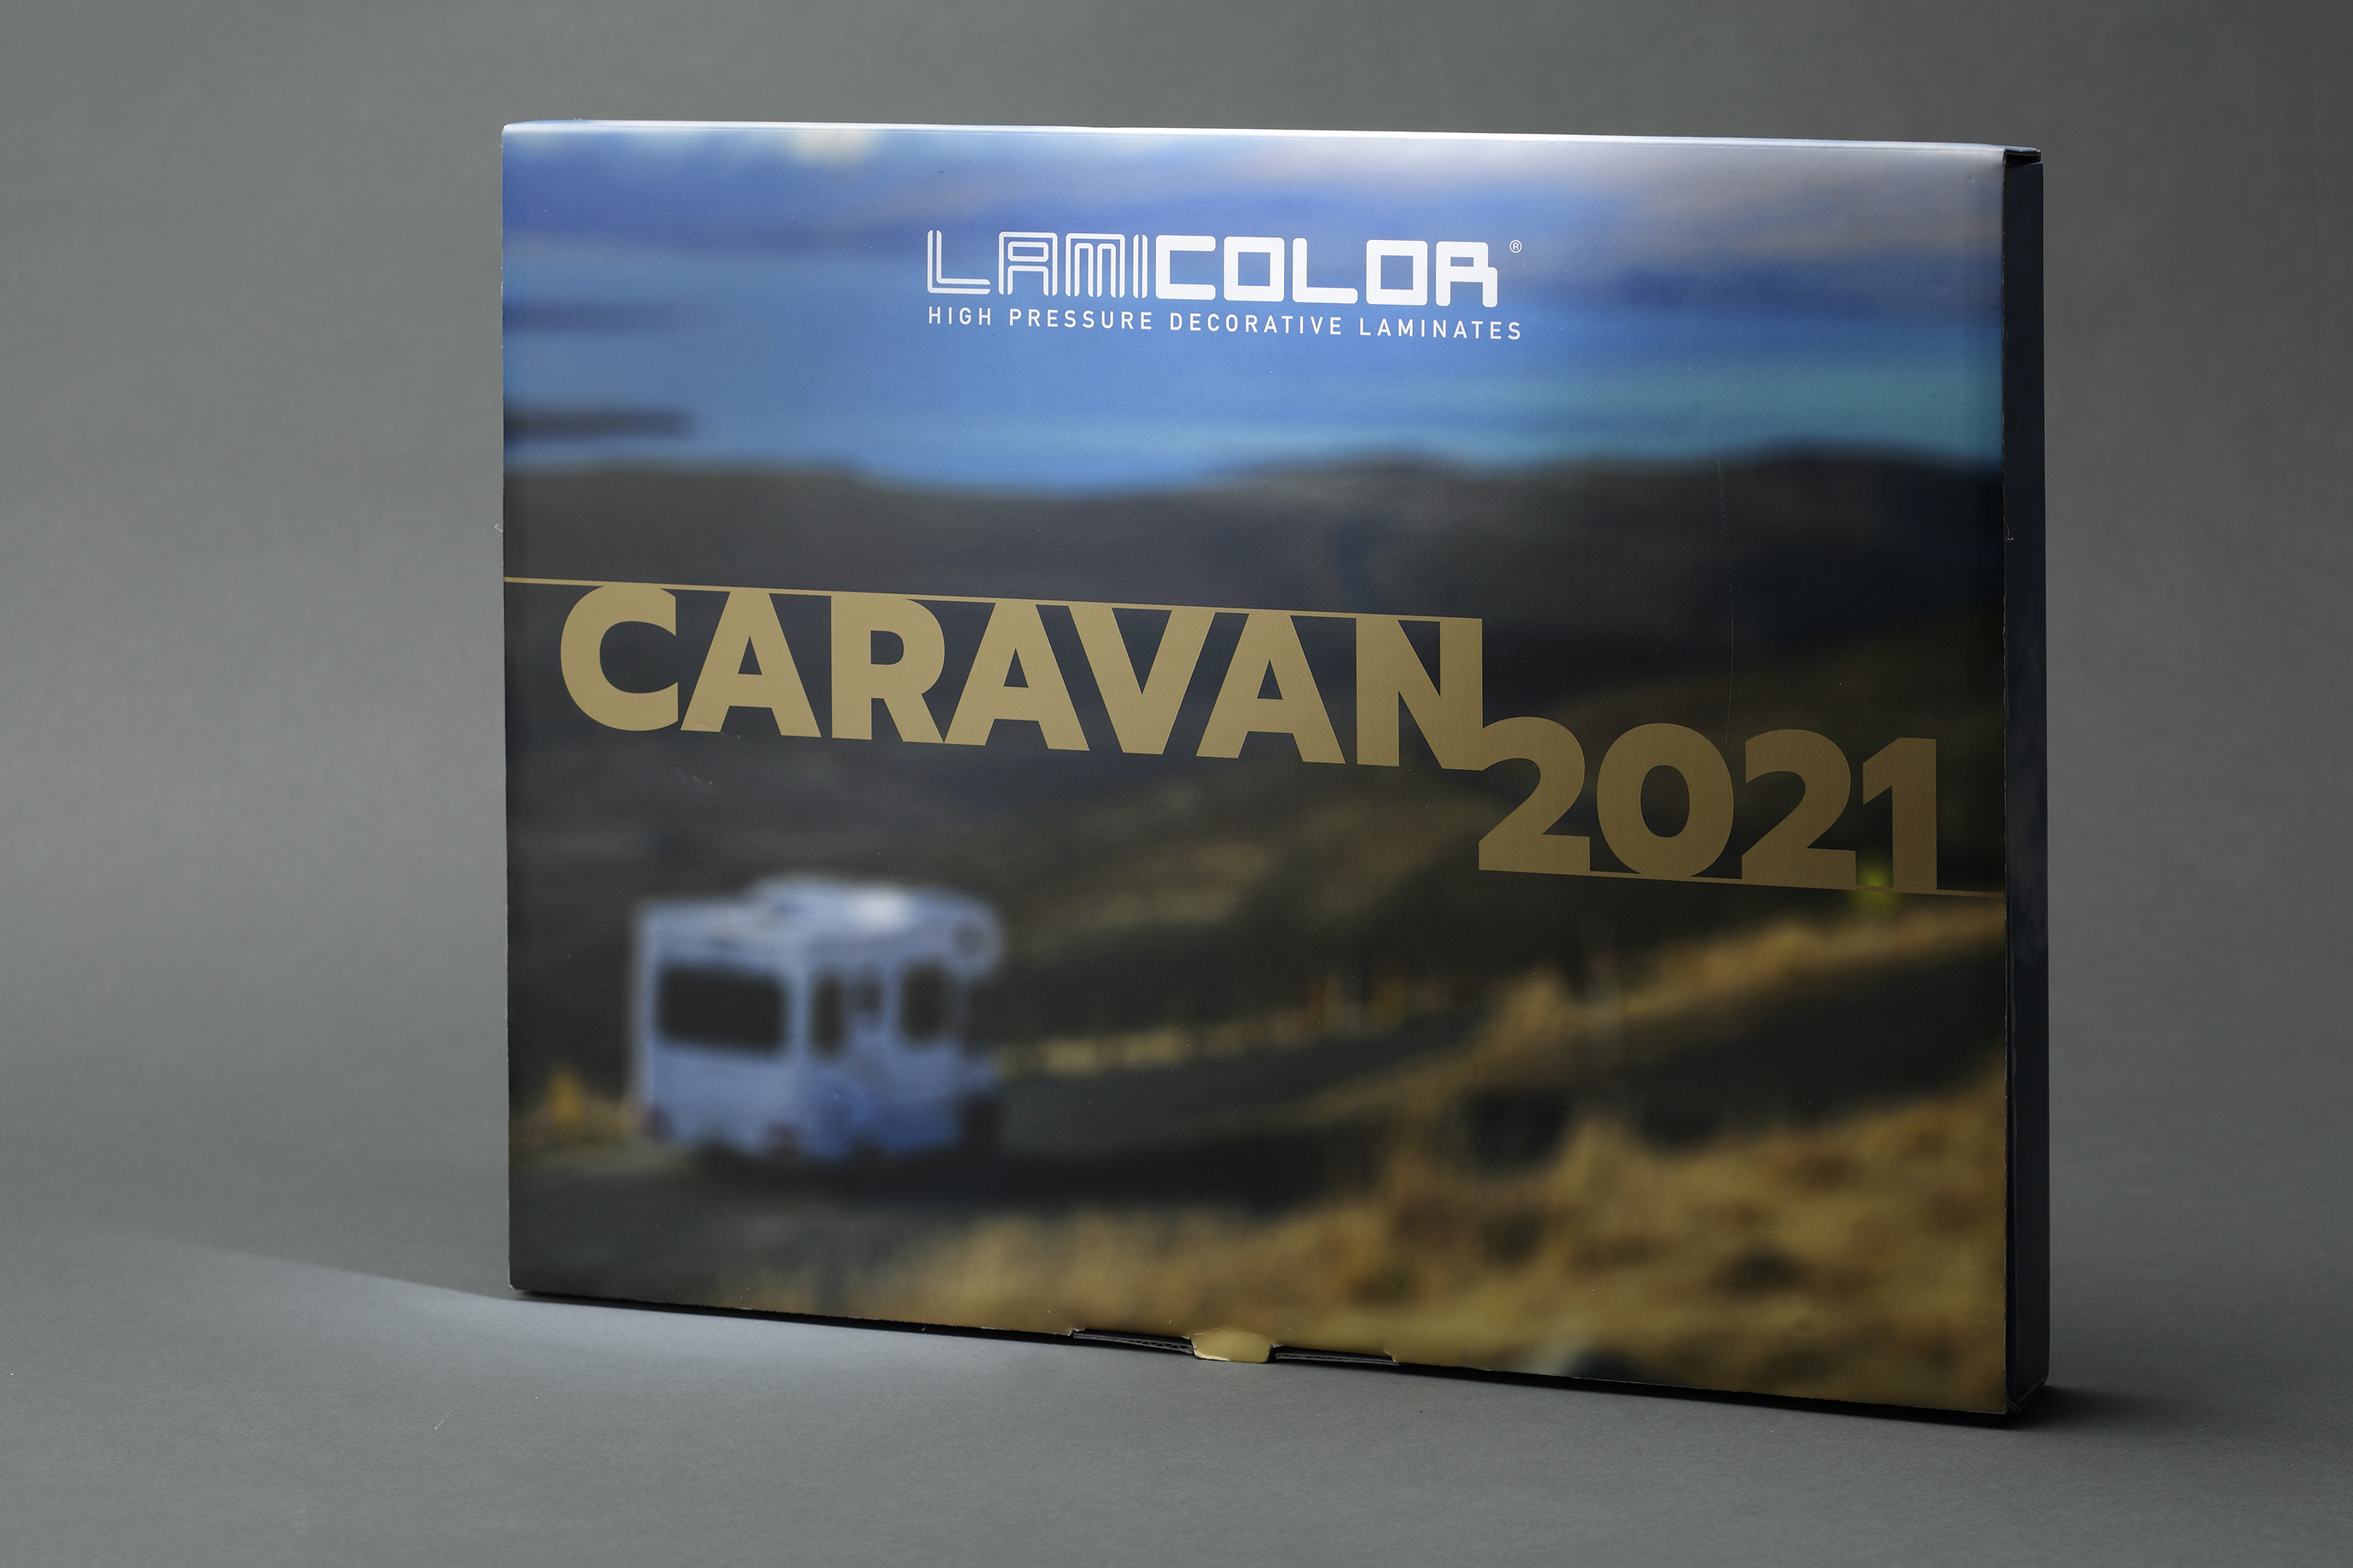 Caravan 2021